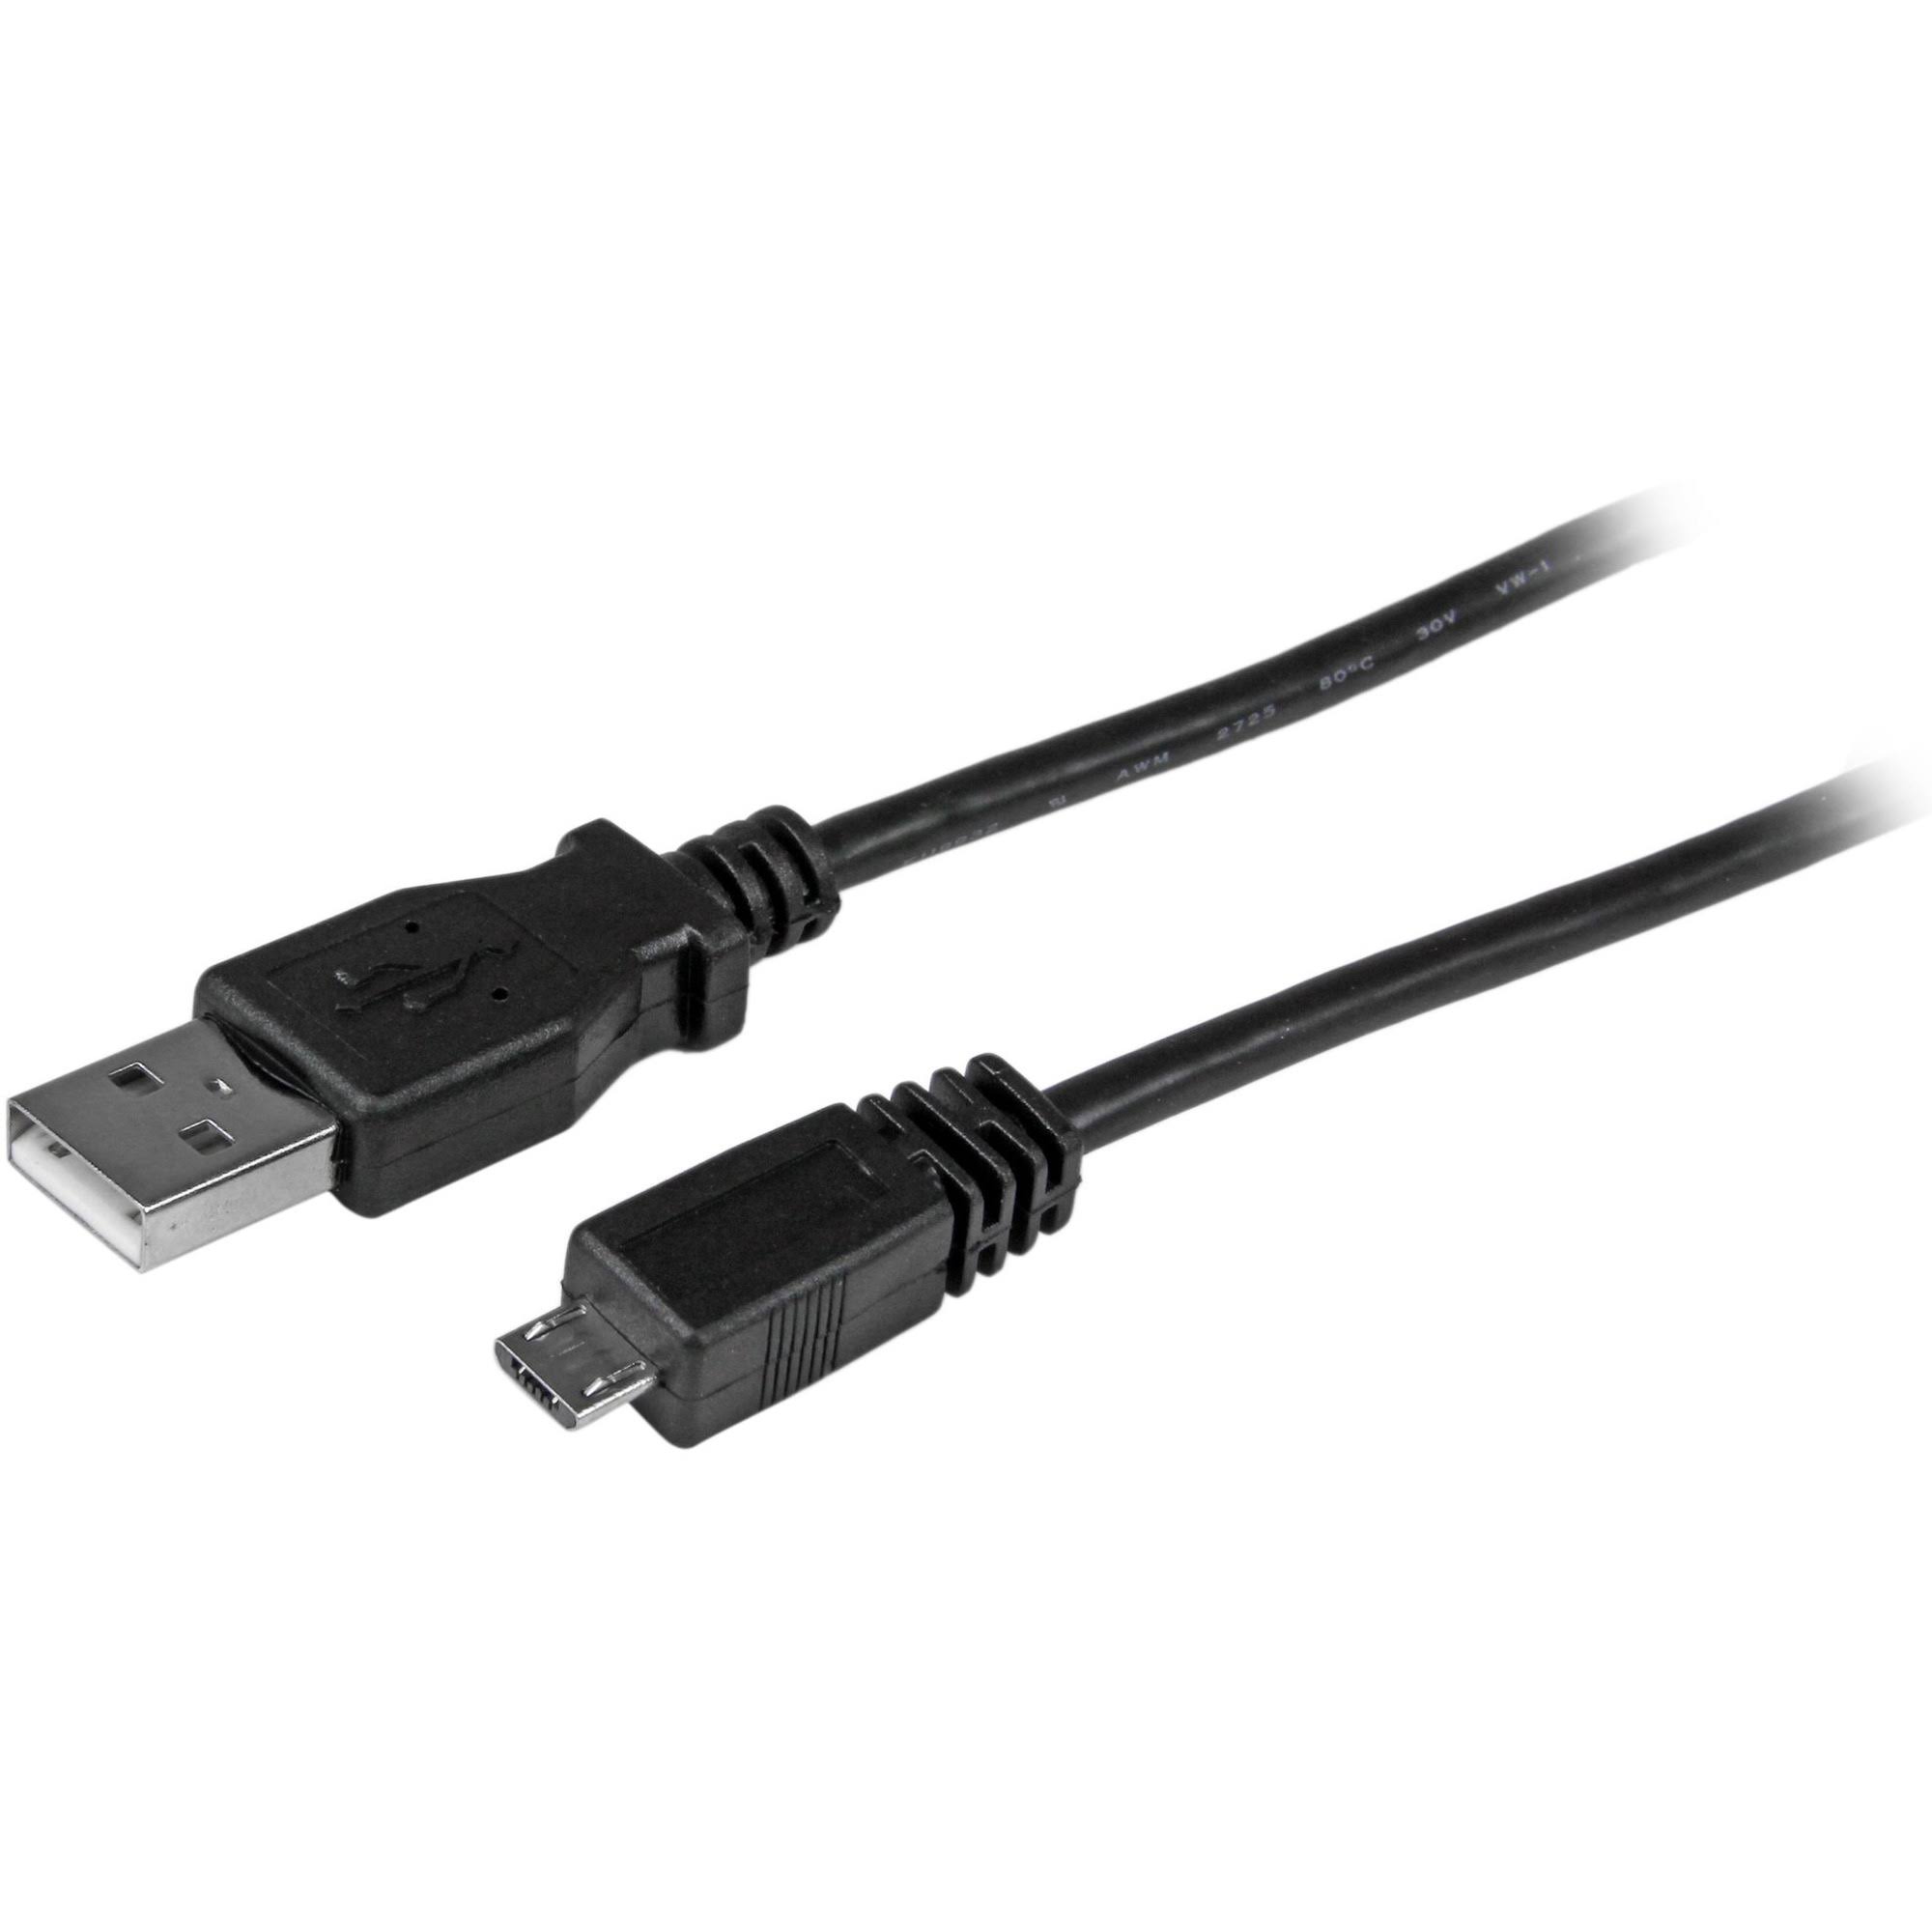 Startech.com Micro USB Cable - 90cm